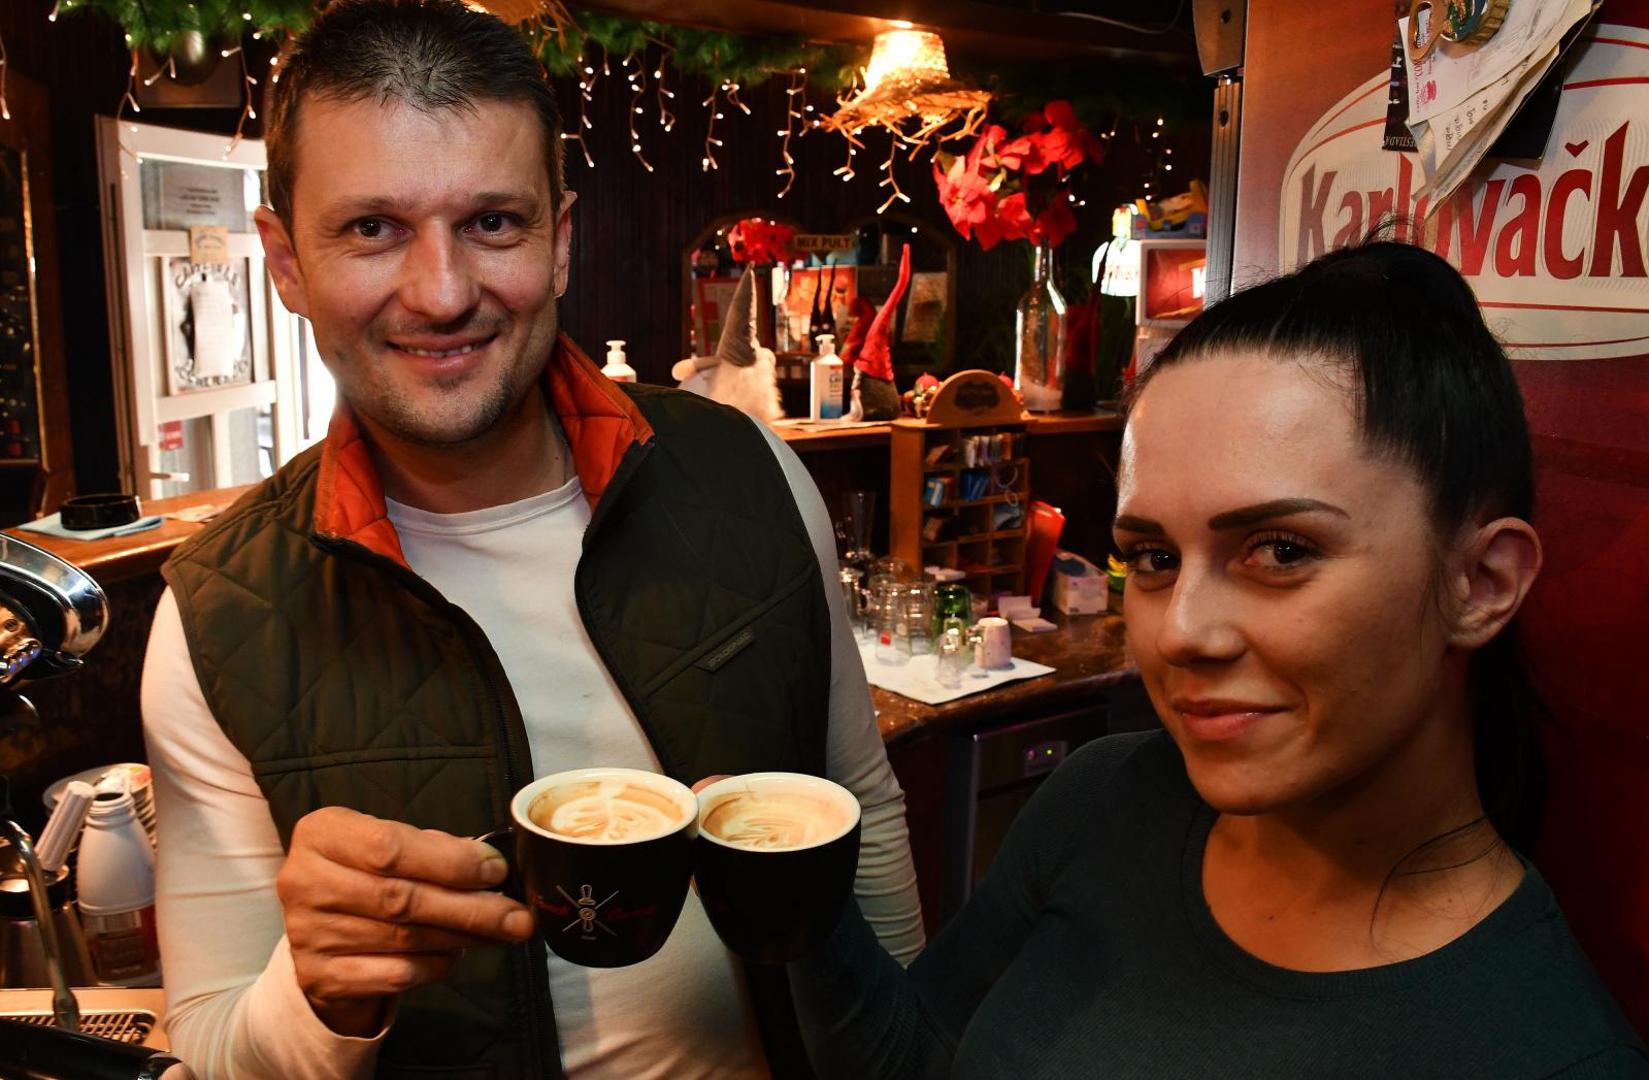 24.11.2020., Slavonski Brod - Vlasnik caffe bara Come back Damir Huljic dobio je  prestizno priznanje Franck Barista Cluba za vrhunski pripremljenu kavu.
Photo: Ivica Galovic/PIXSELL